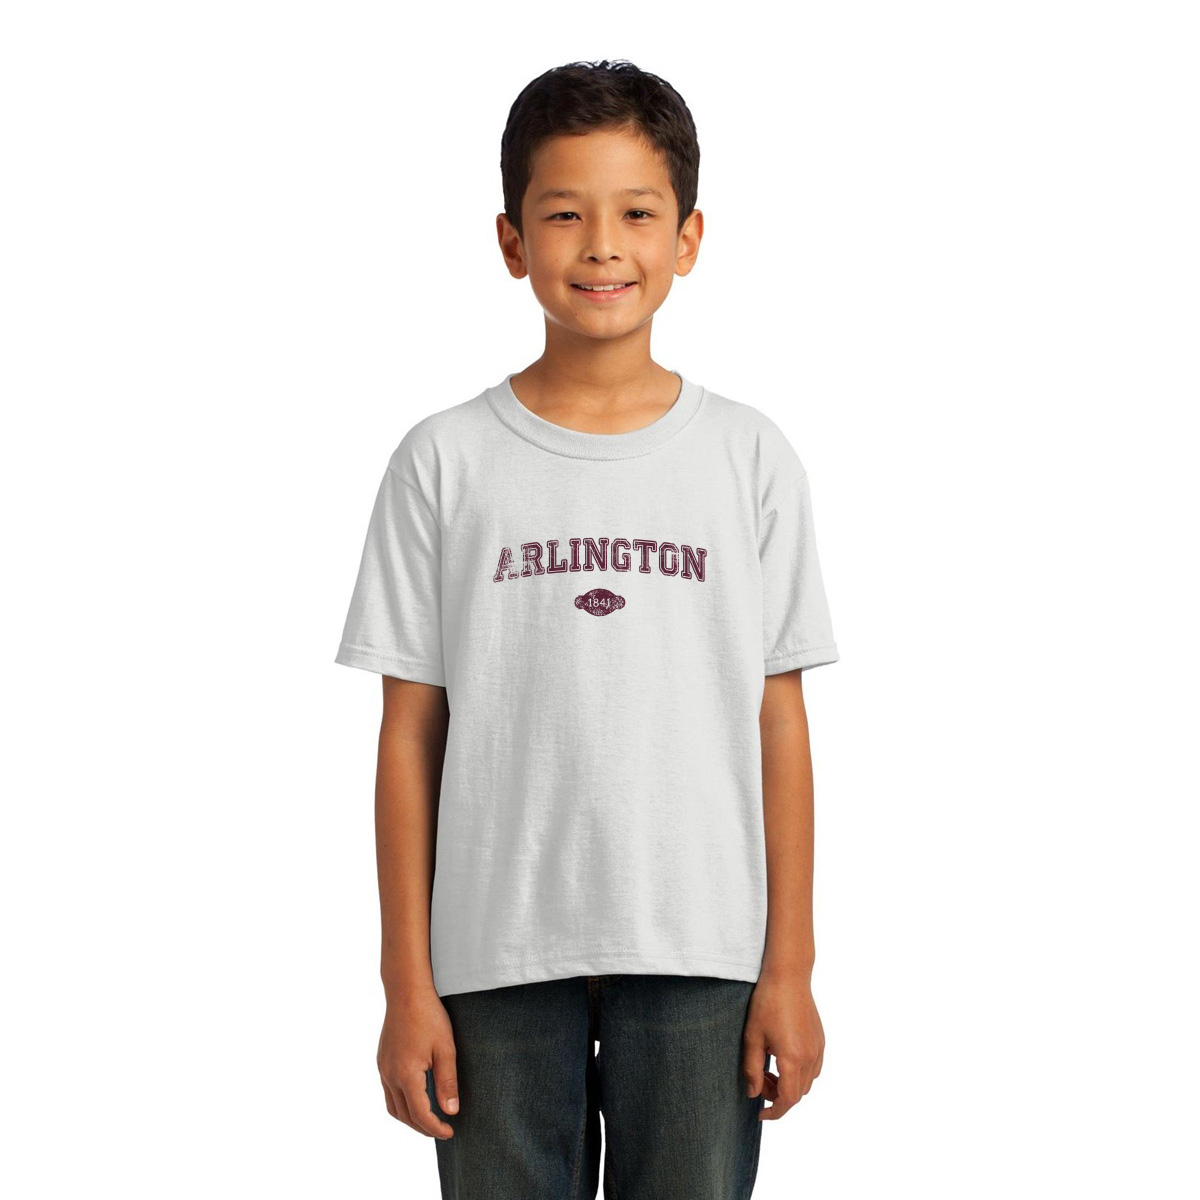 Arlington 1841 Represent Toddler T-shirt | White